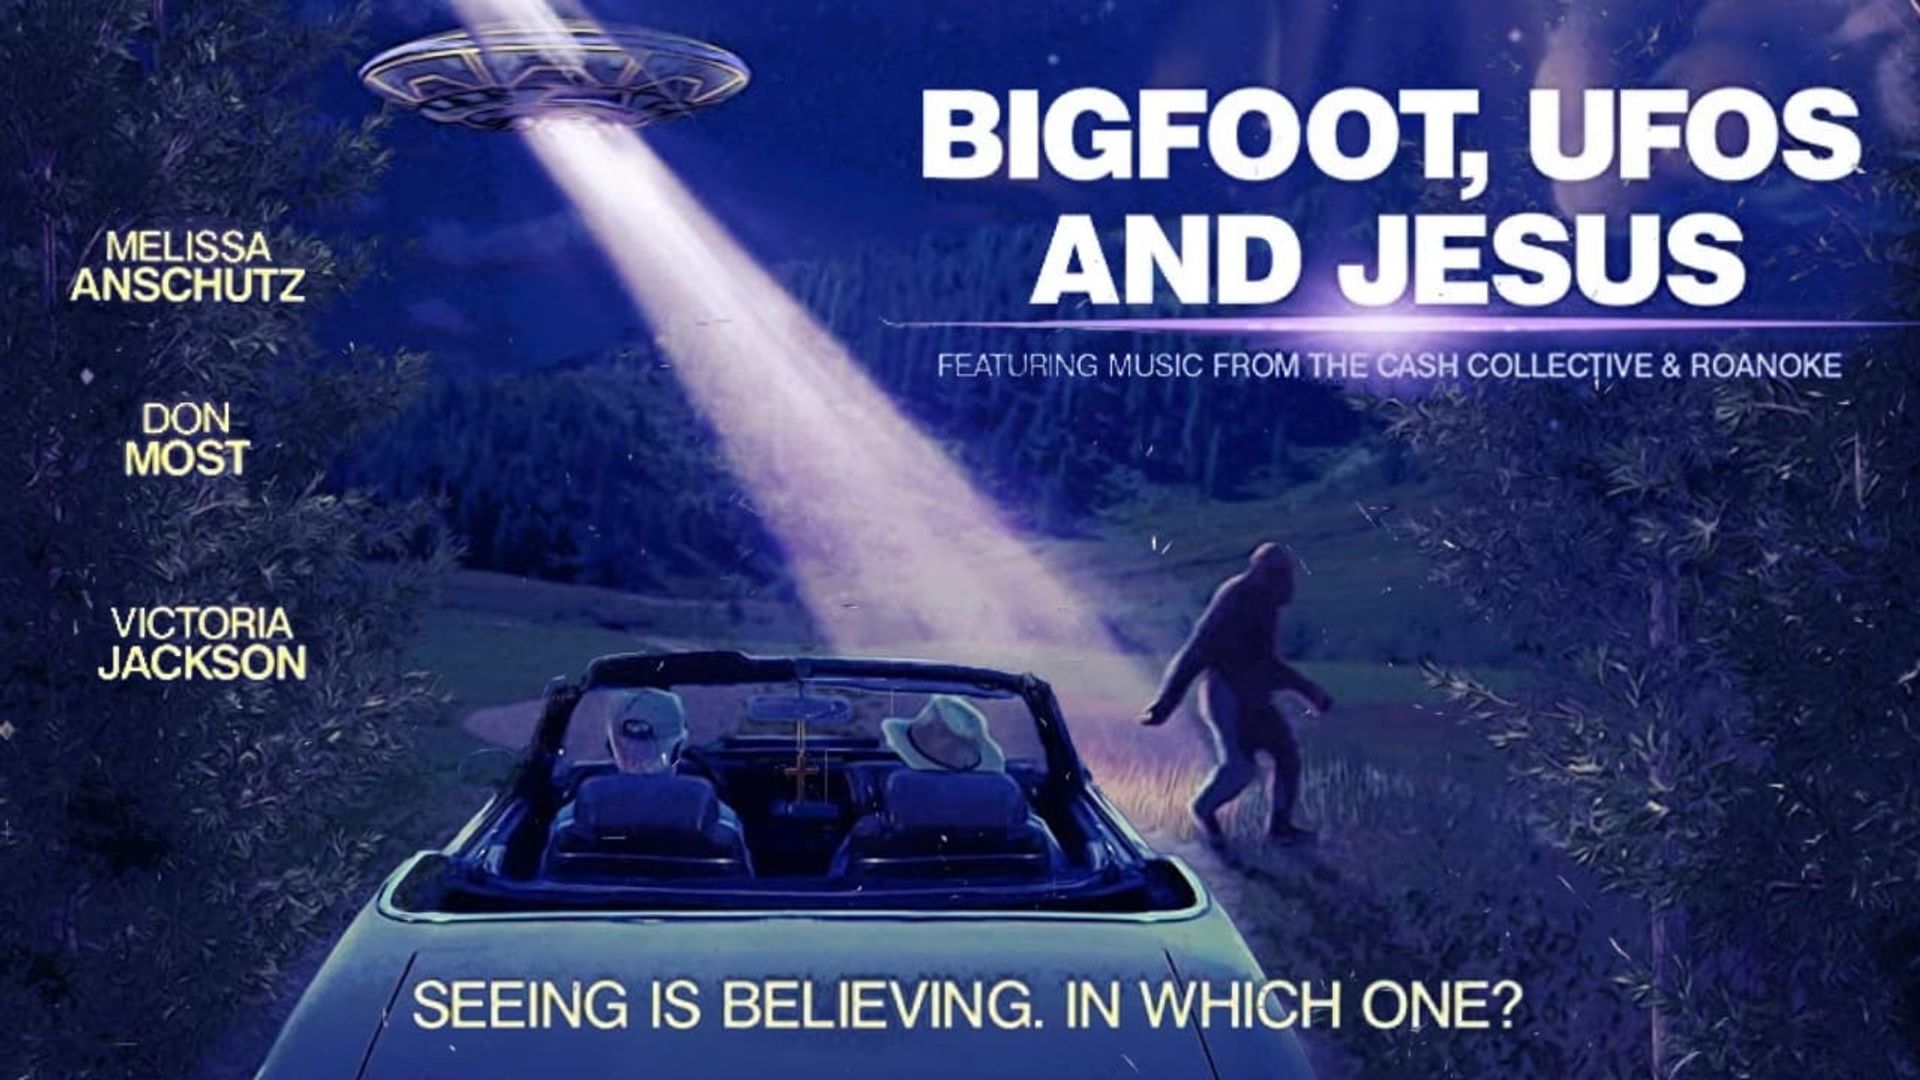 Bigfoot, UFOs and Jesus background